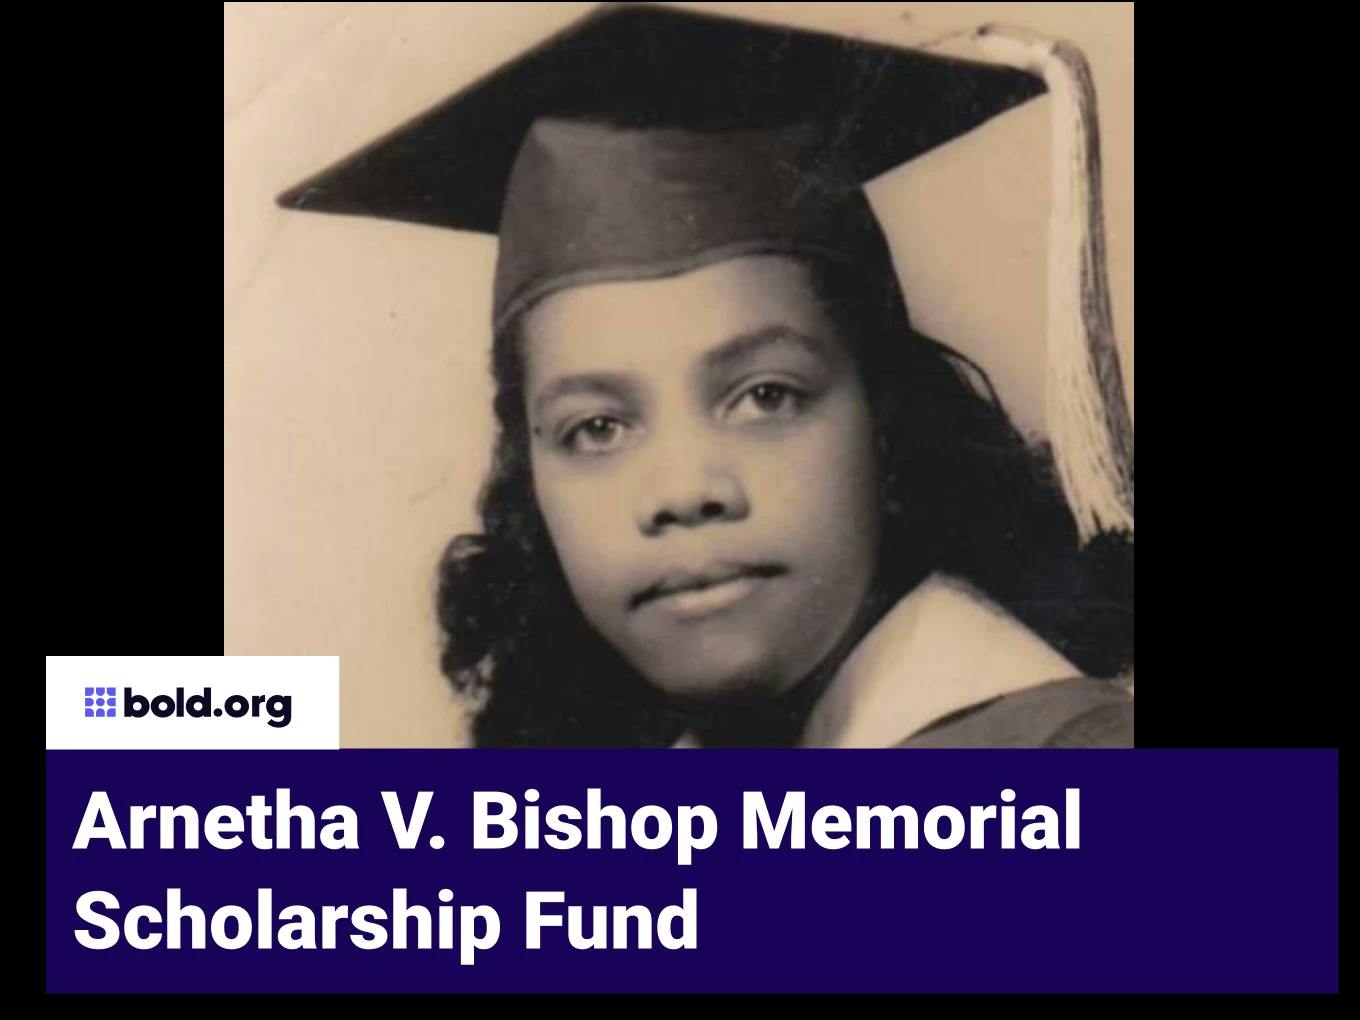 Arnetha V. Bishop Memorial Scholarship Fund